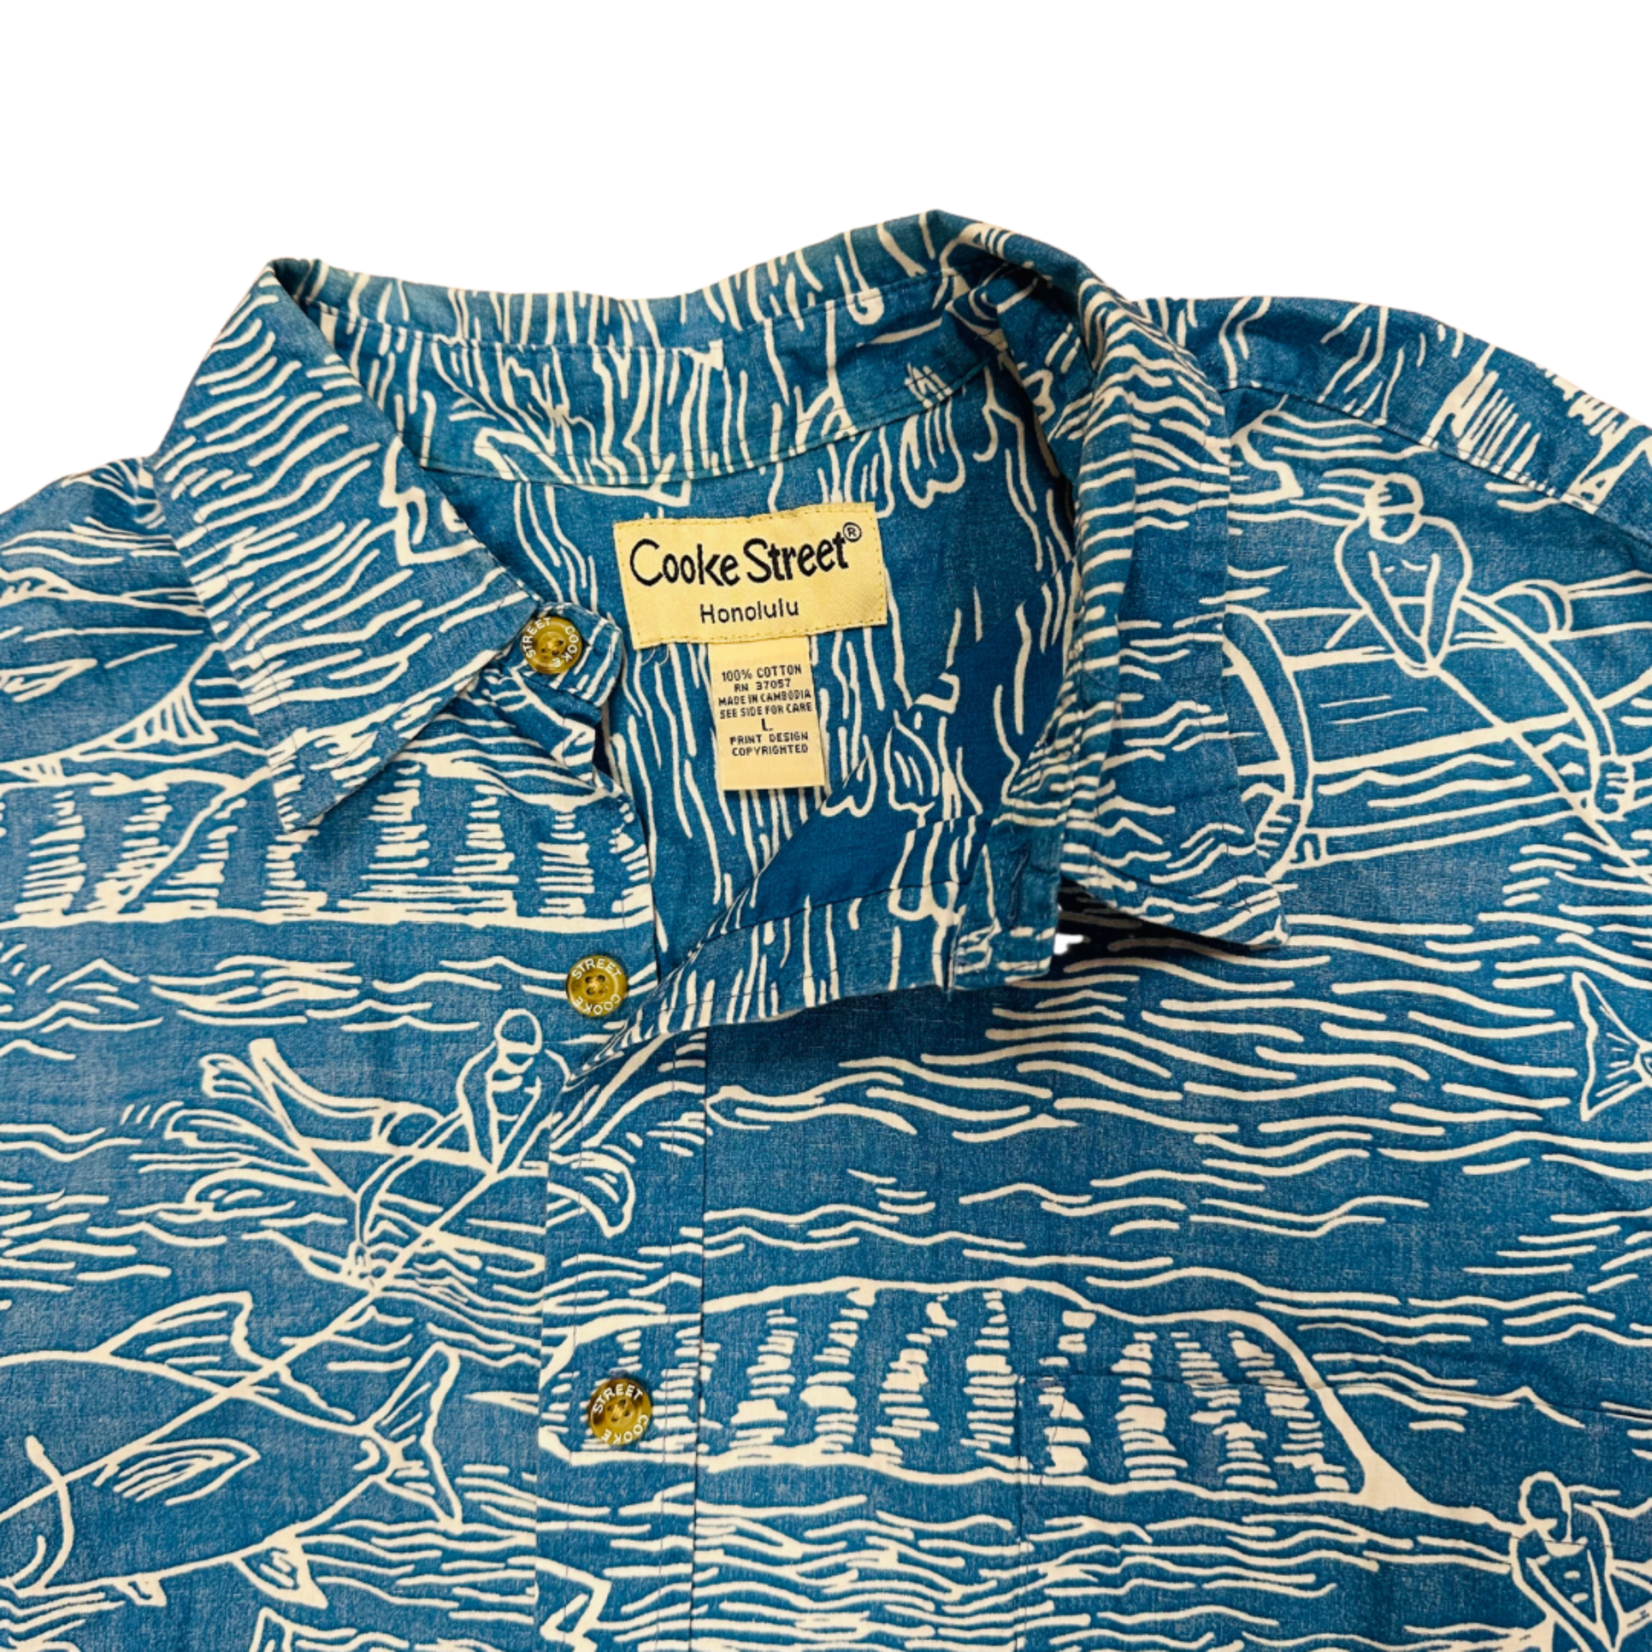 Mission Zero Men's ReLoved Aloha Shirt - Cooke Street - Blue Ulua Canoe - Large